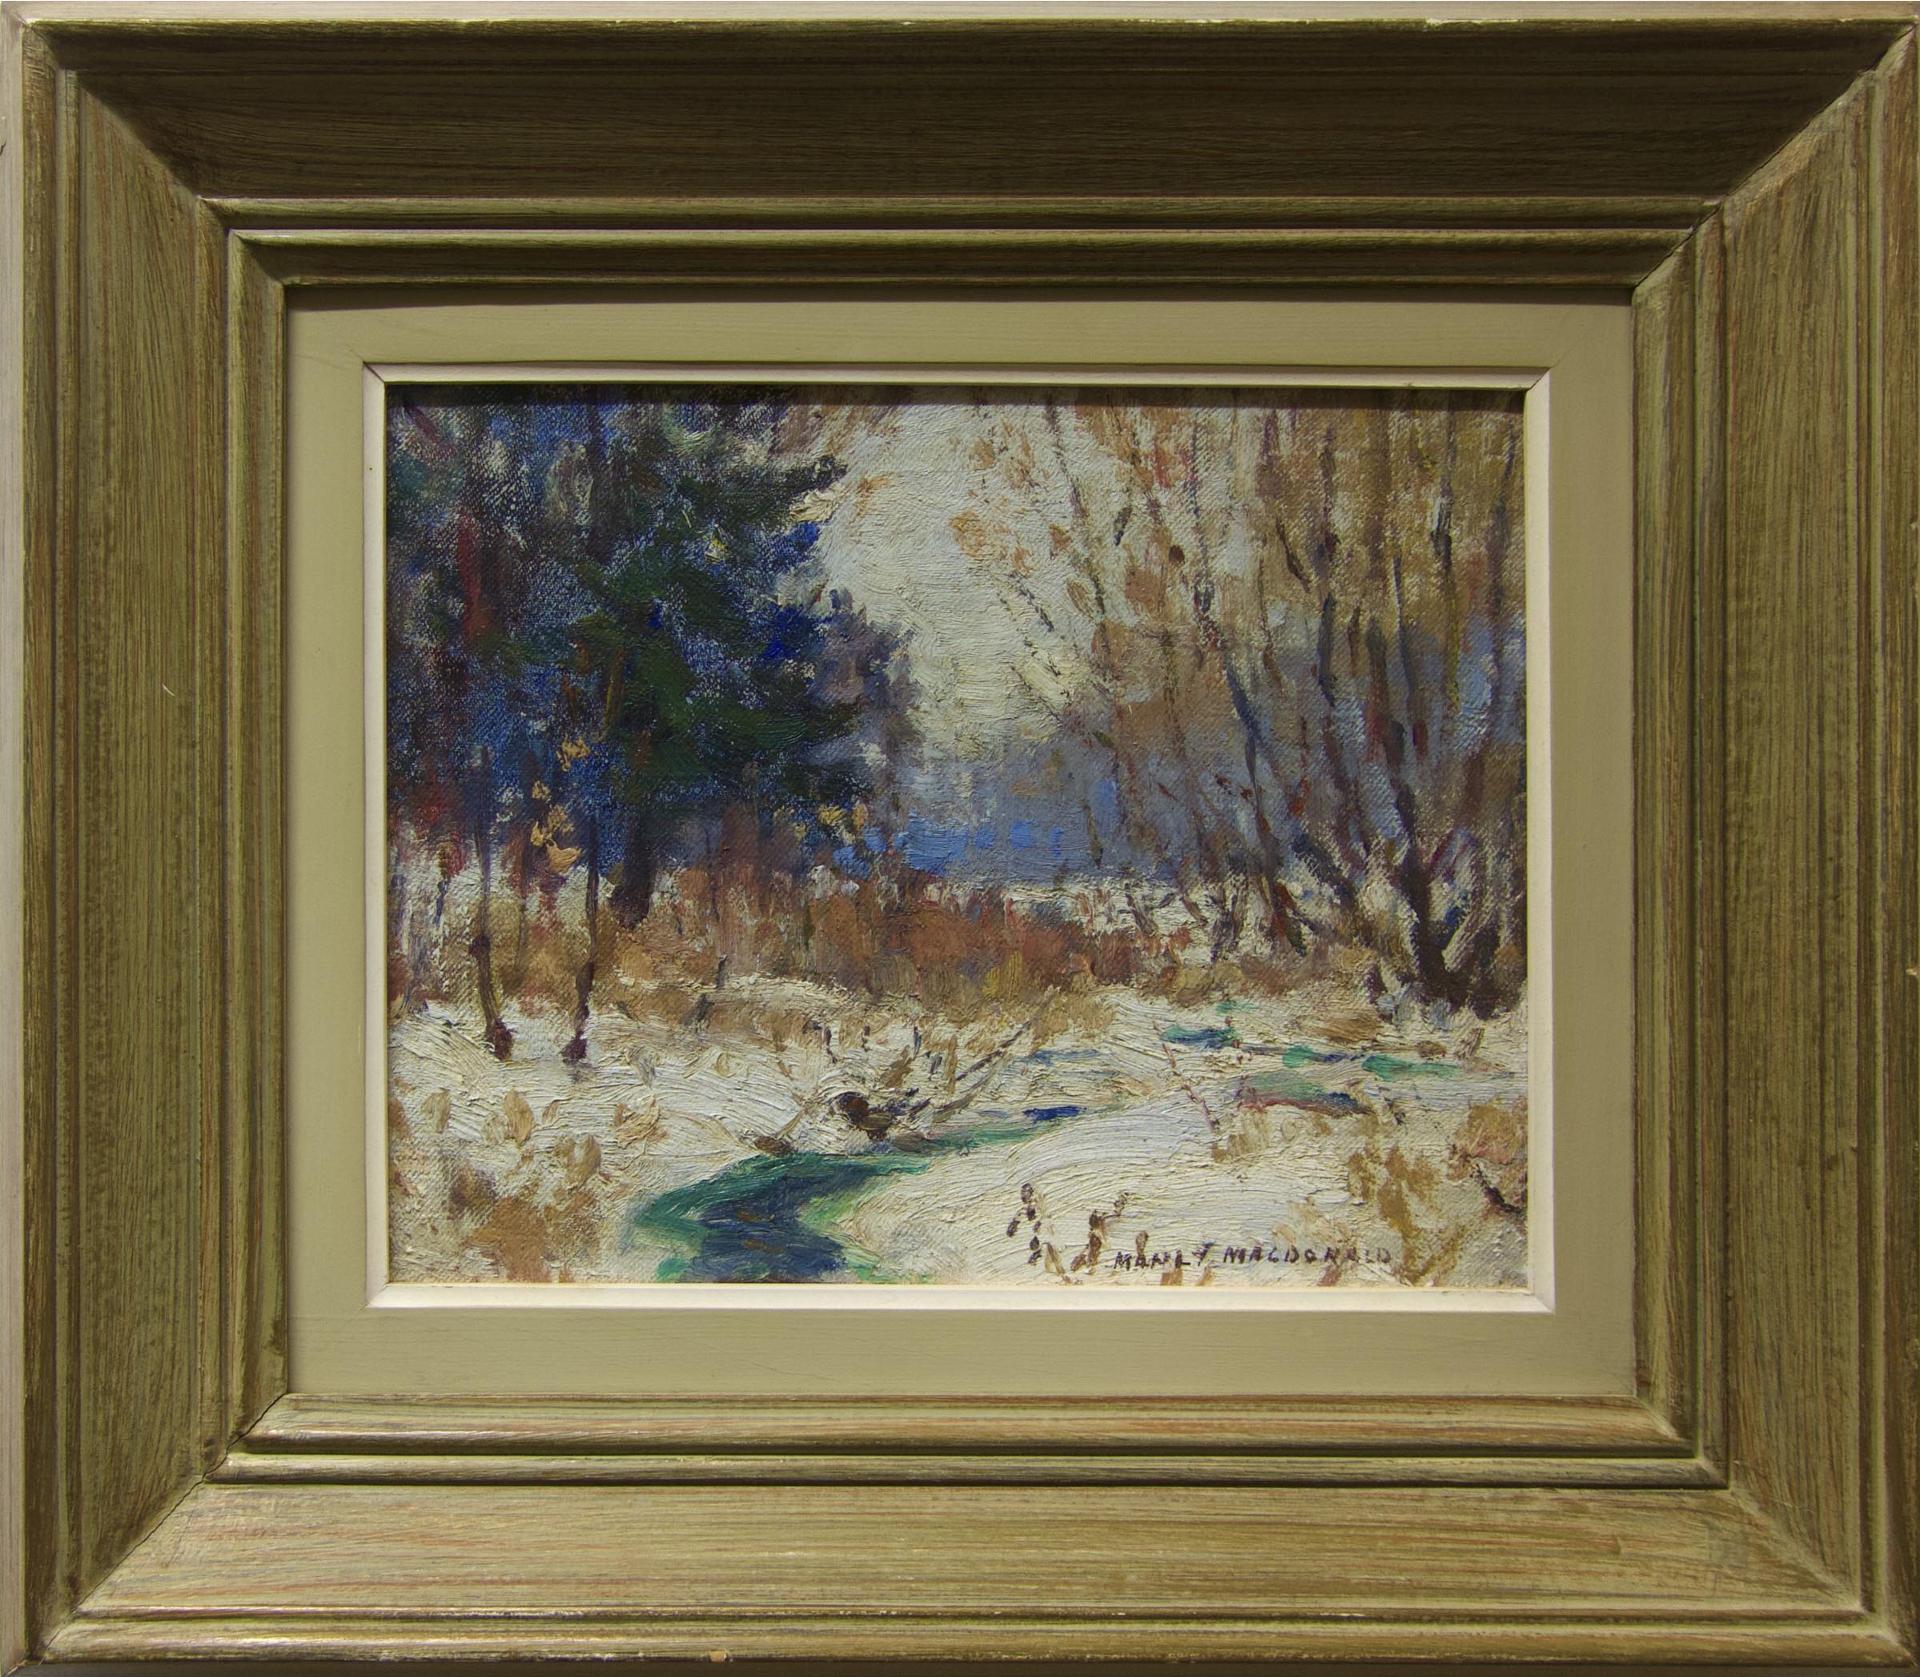 Manly Edward MacDonald (1889-1971) - Untitled (Winter Creek)